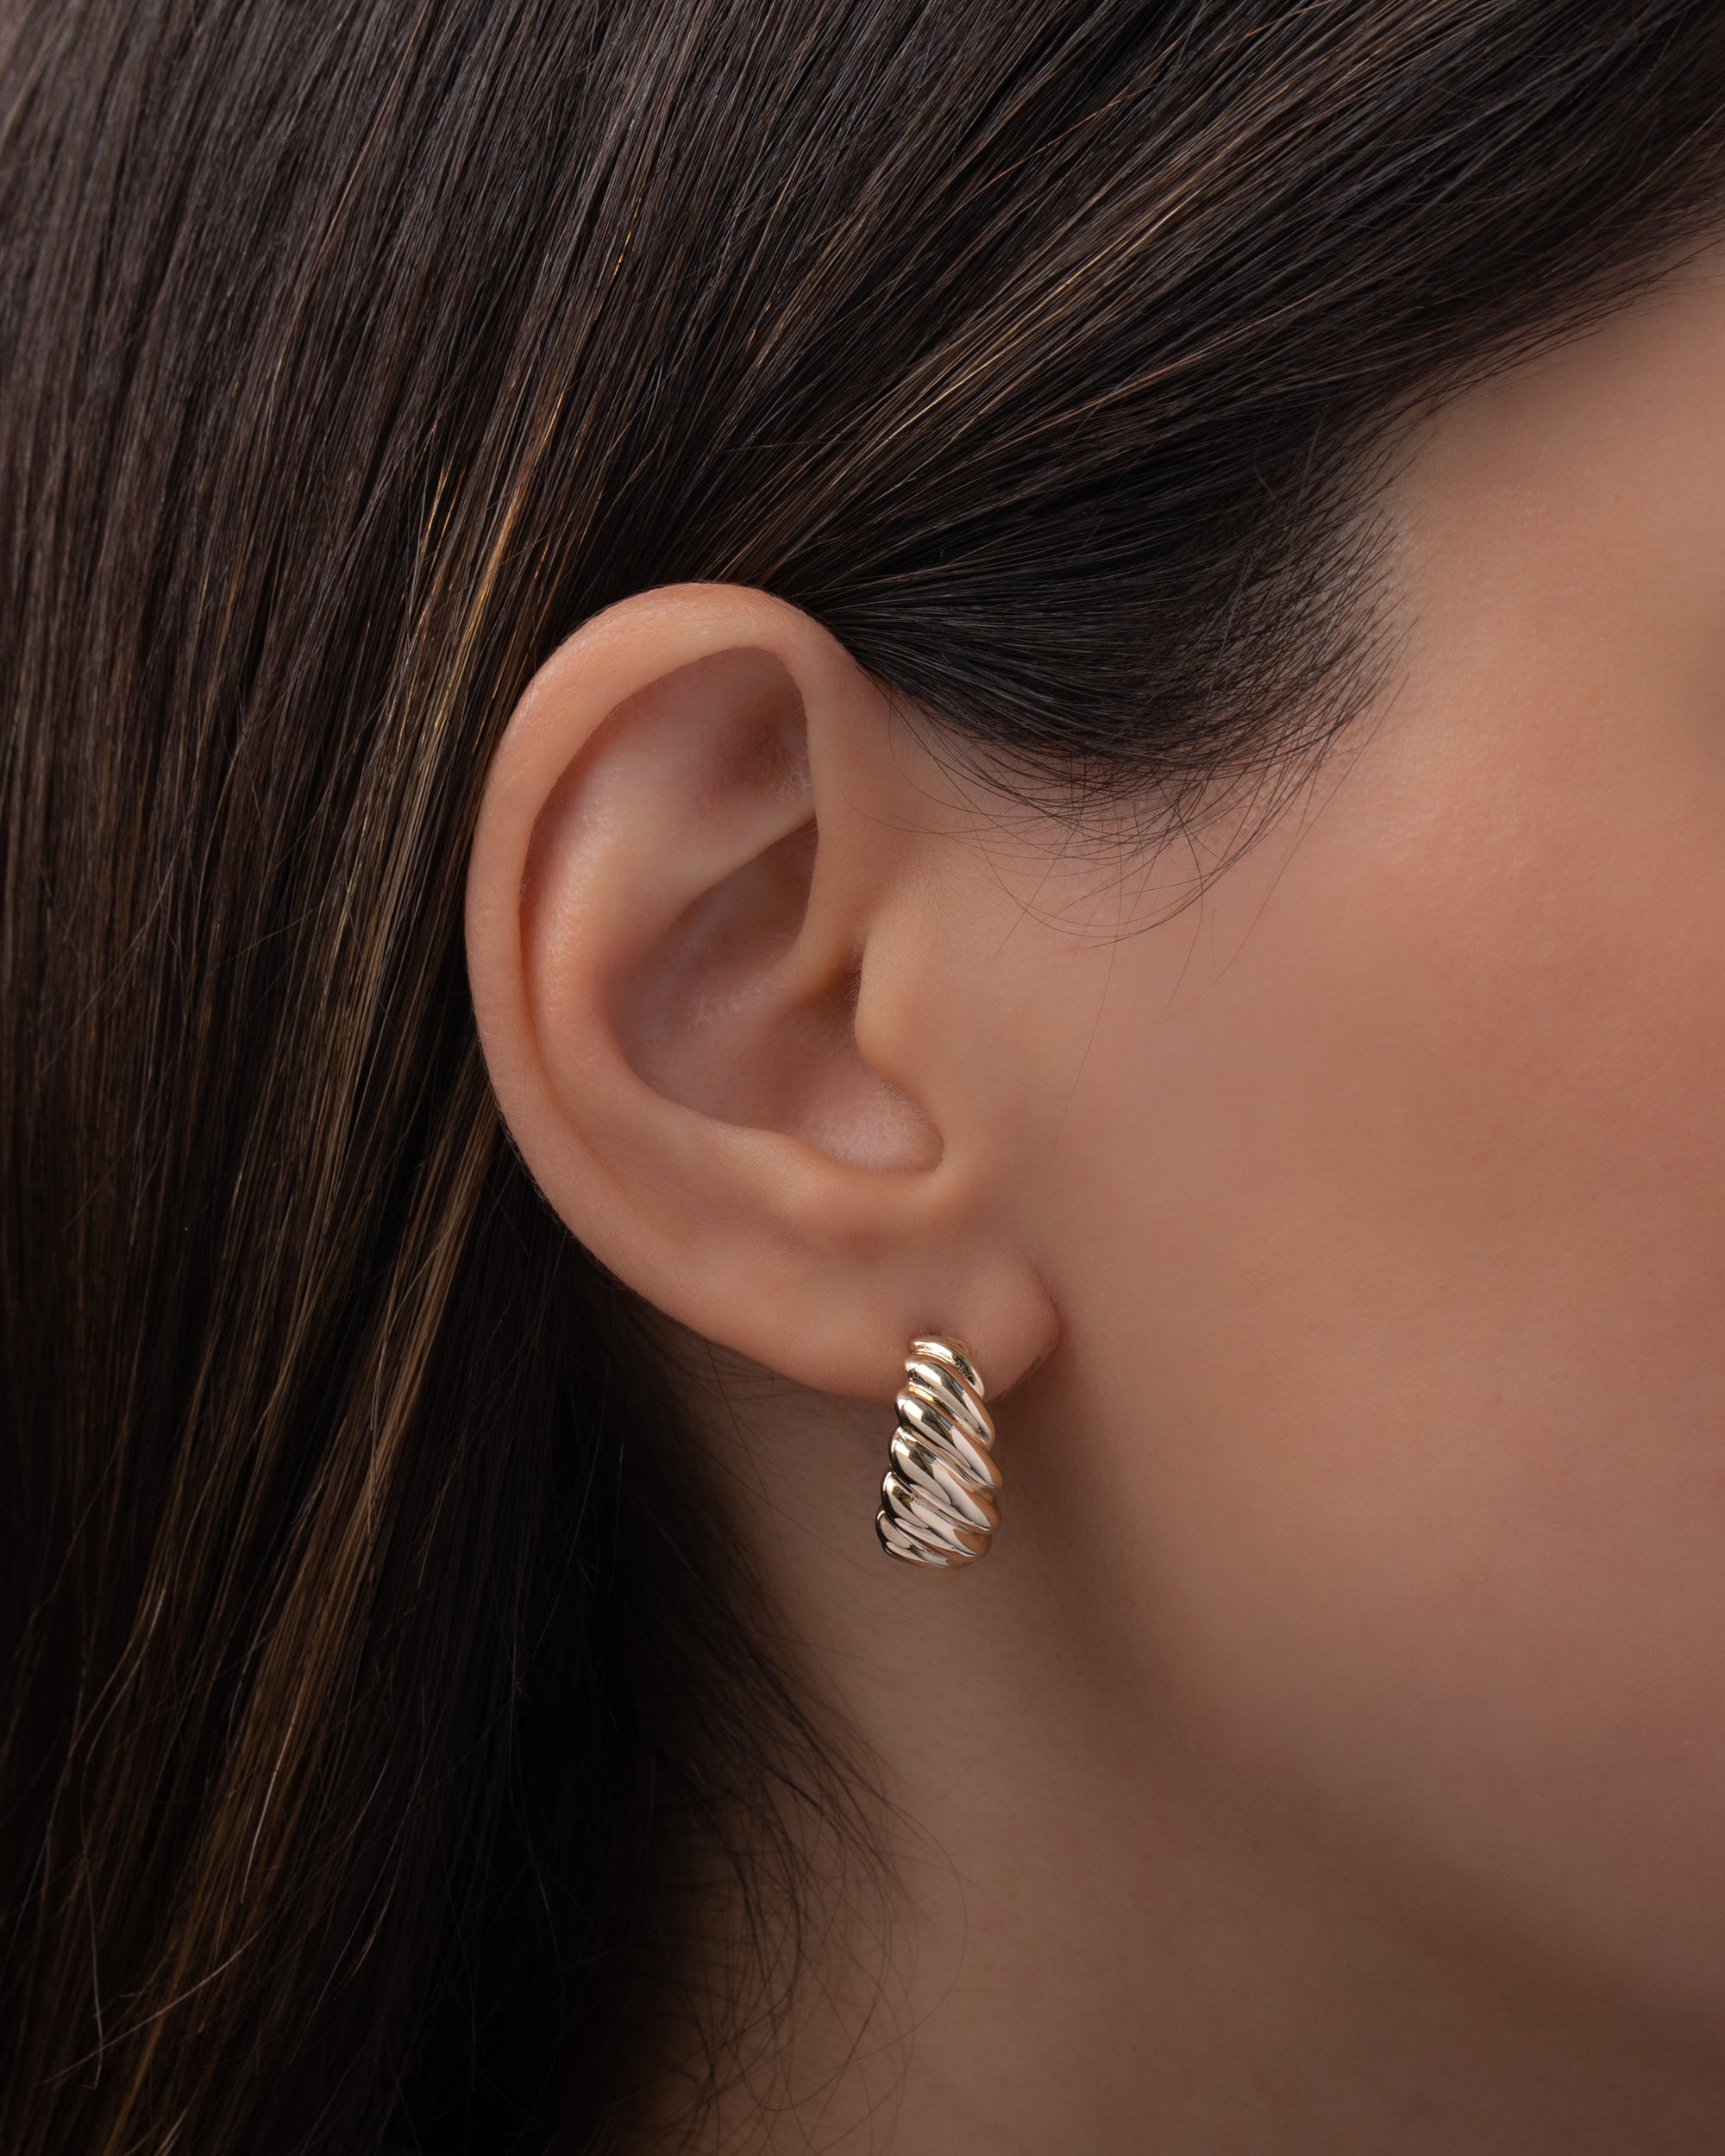 Zoe Lev Jewelry 14K Gold Medium Thick Hoop Earrings